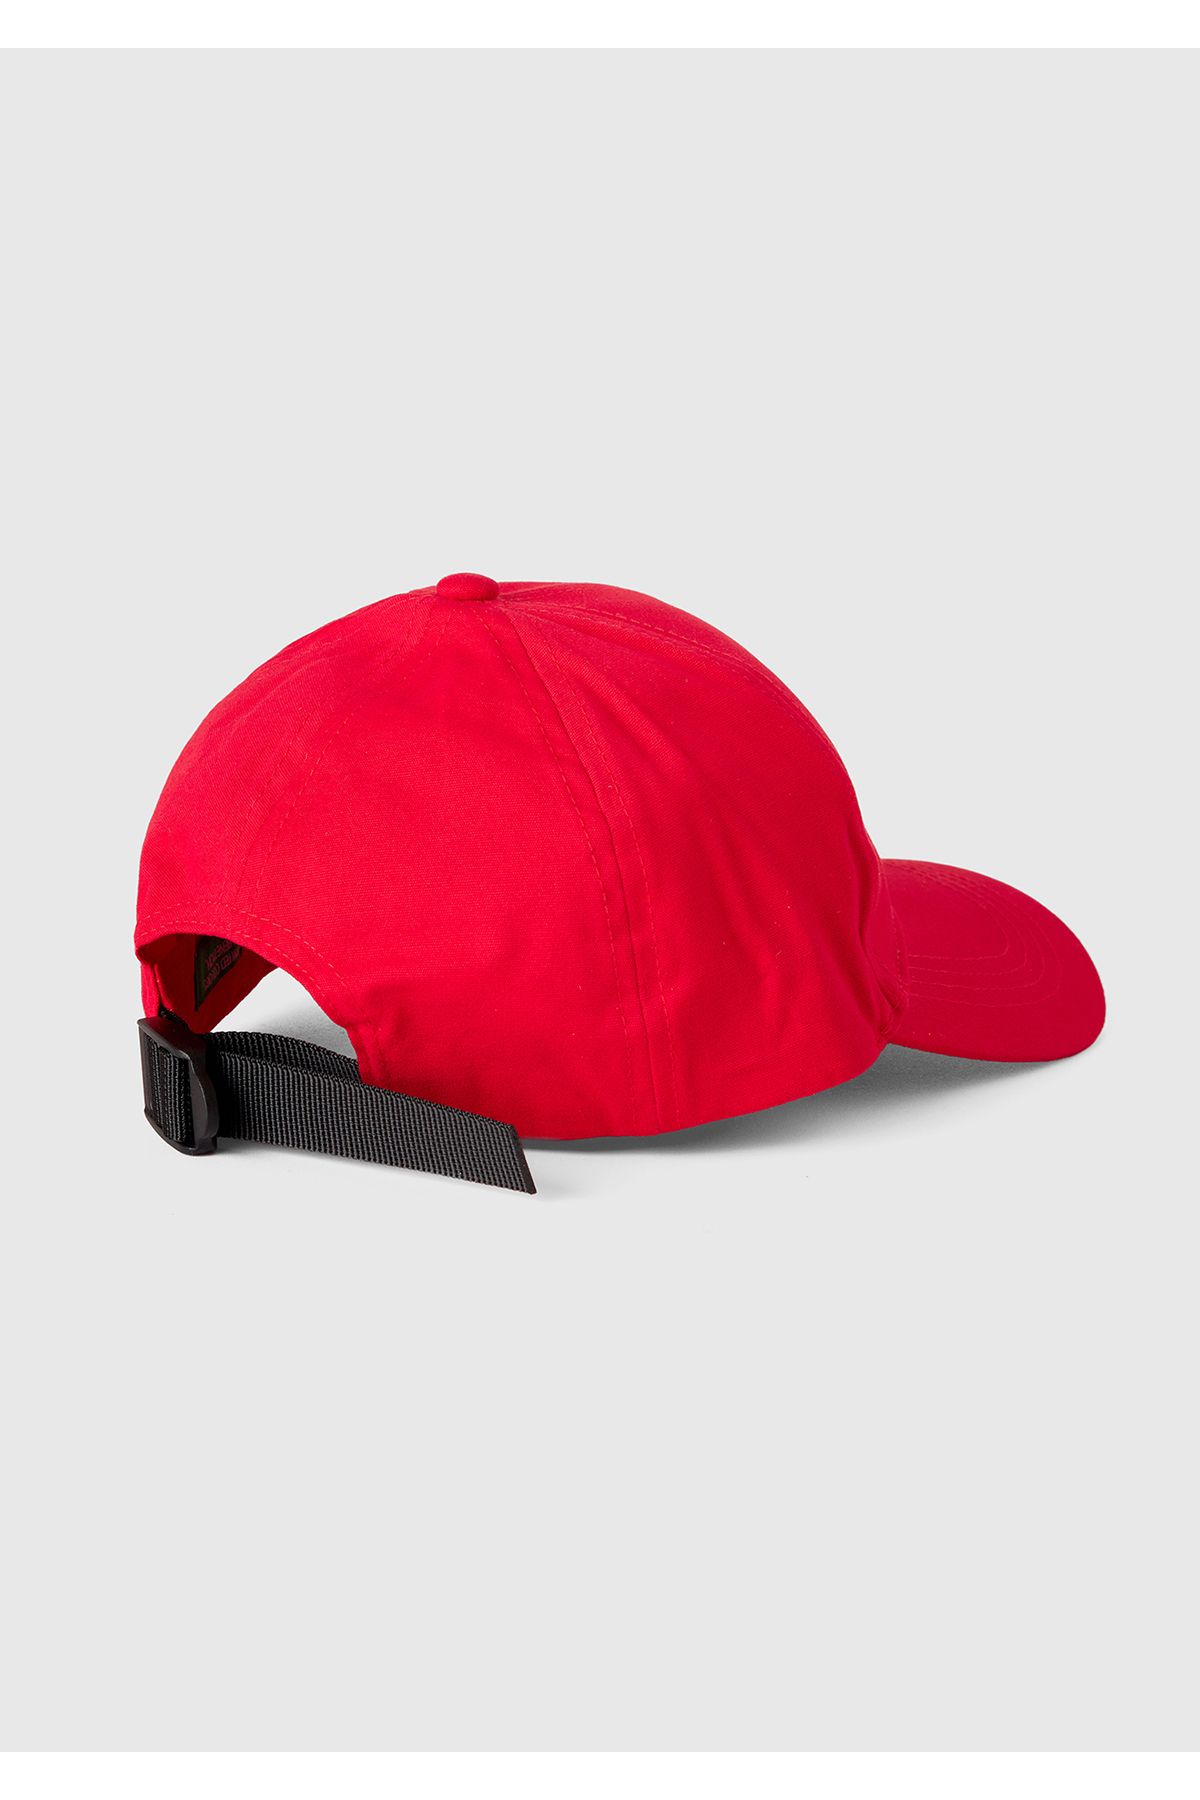 United Colors of Benetton آرم جلوی قرمز پسر کلاه کاپ قابل تنظیم دوزی شده